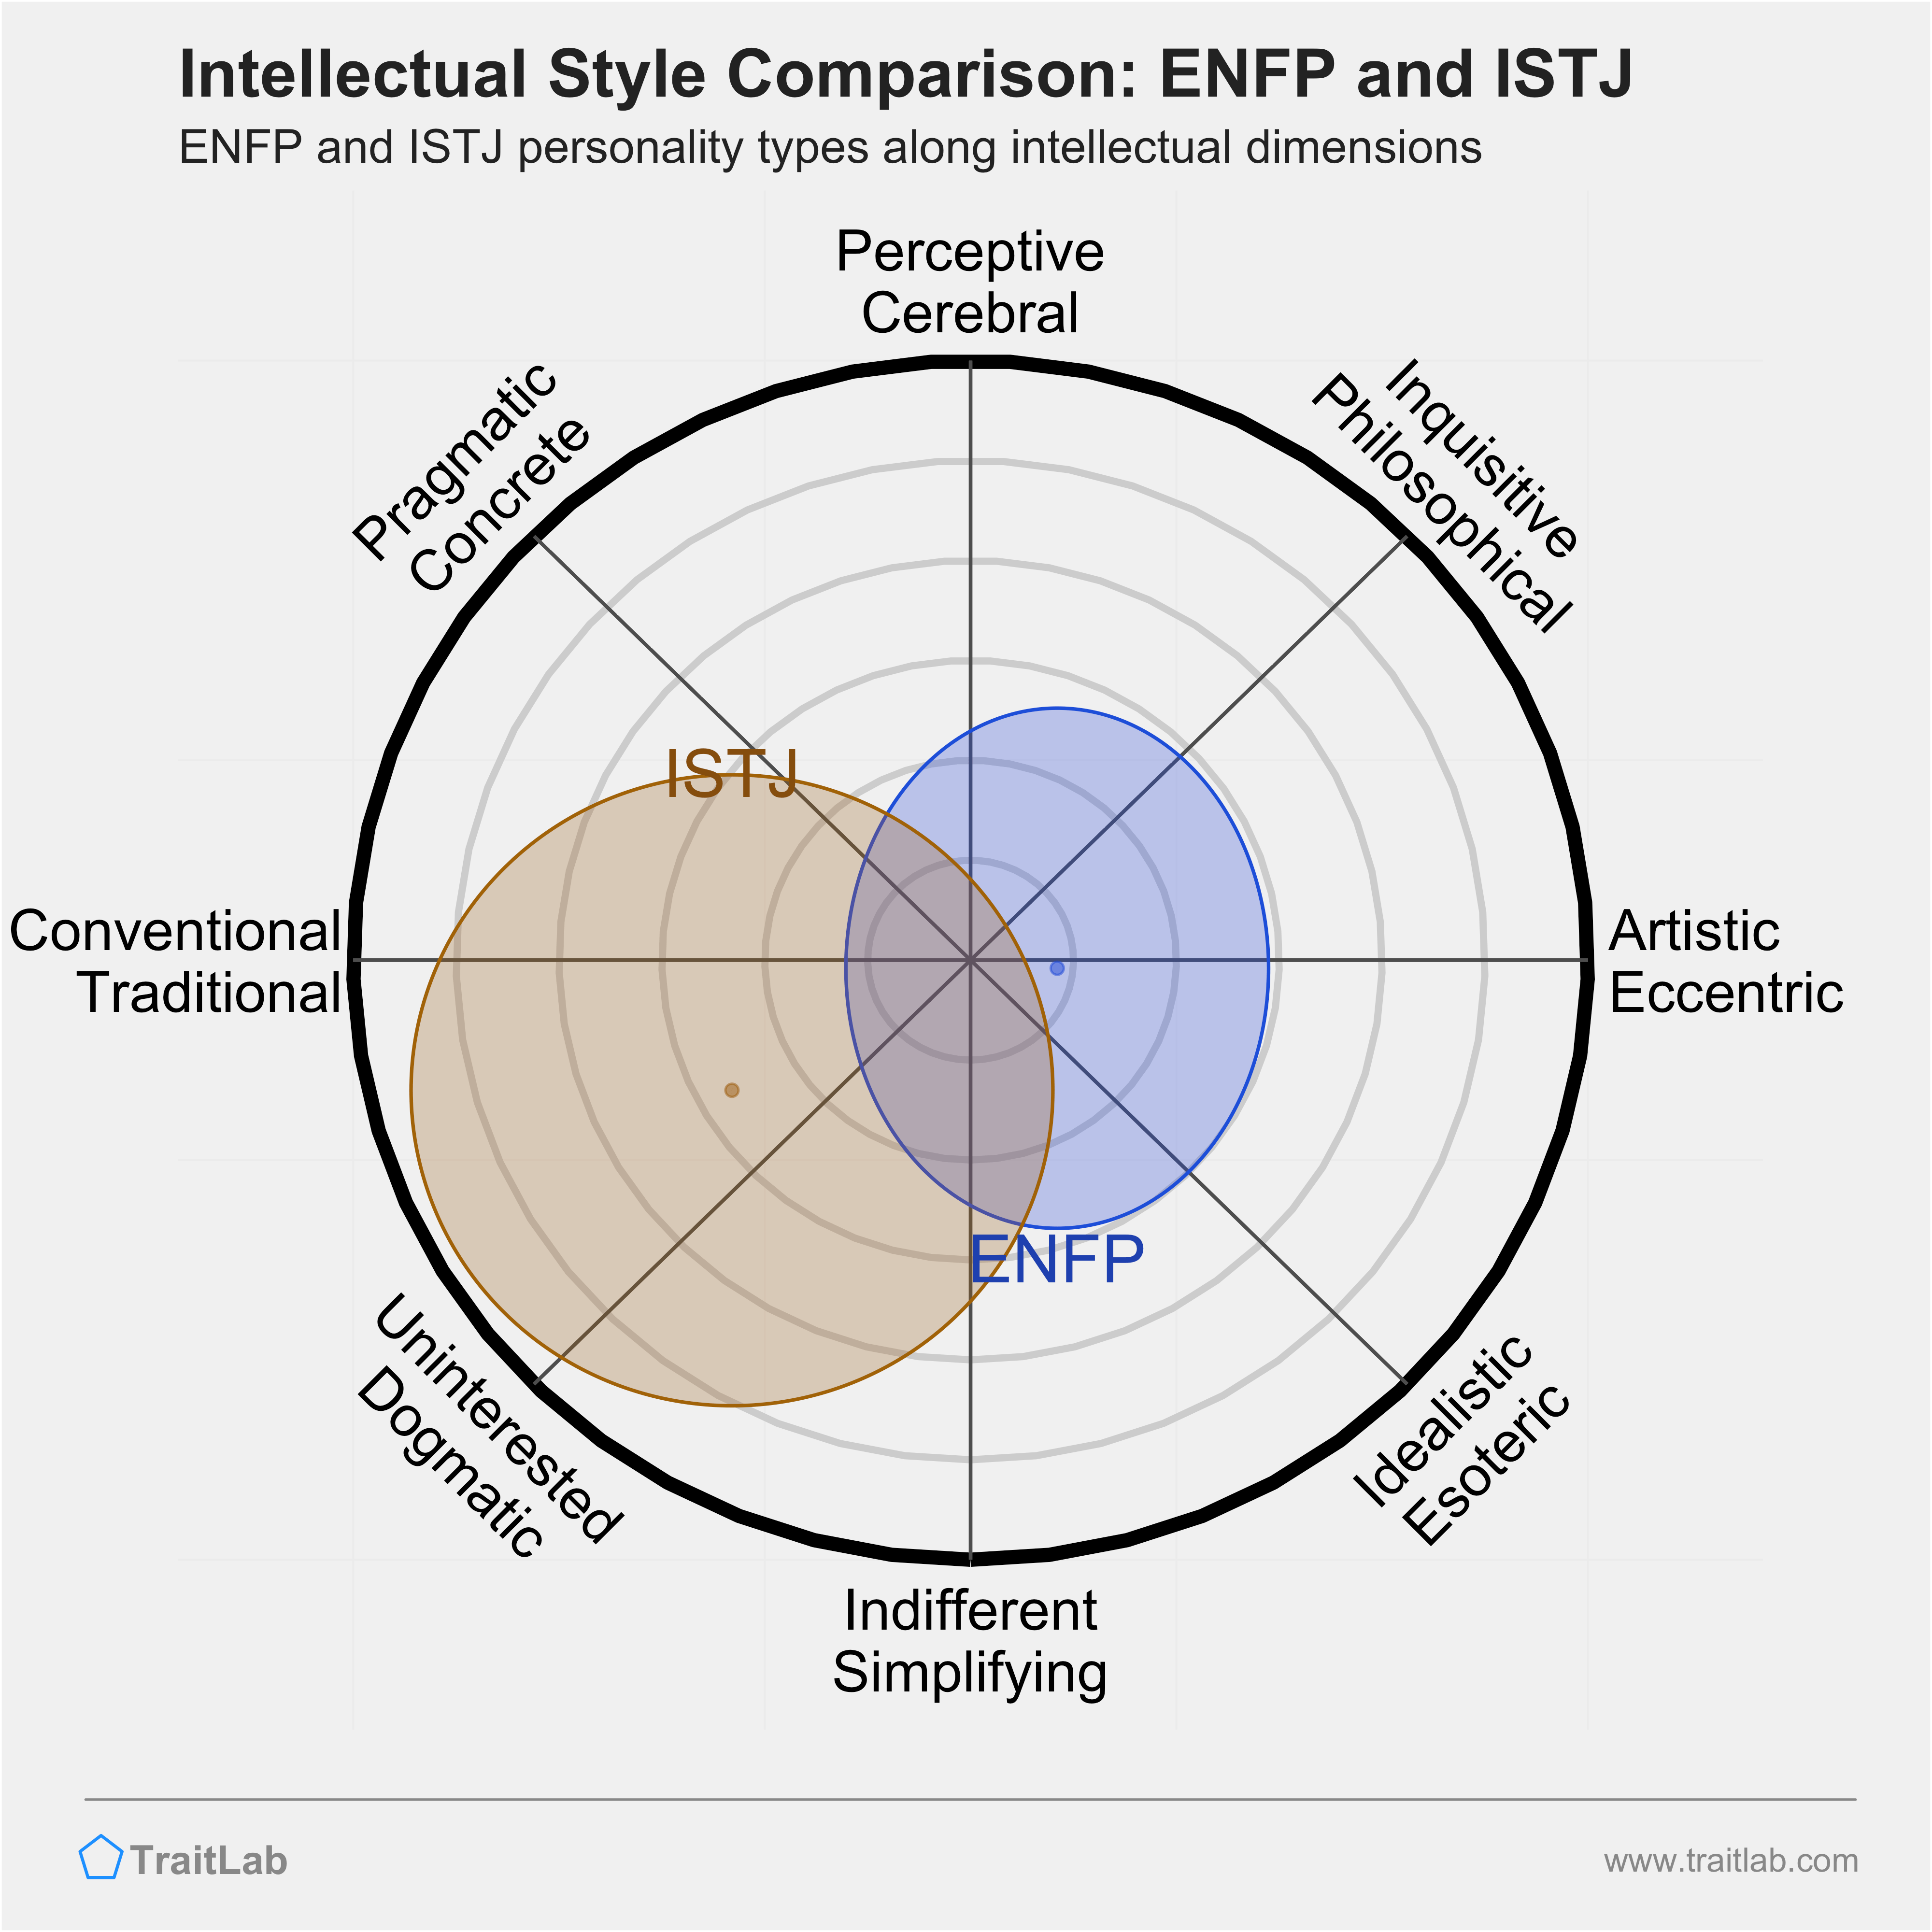 ENFP and ISTJ comparison across intellectual dimensions